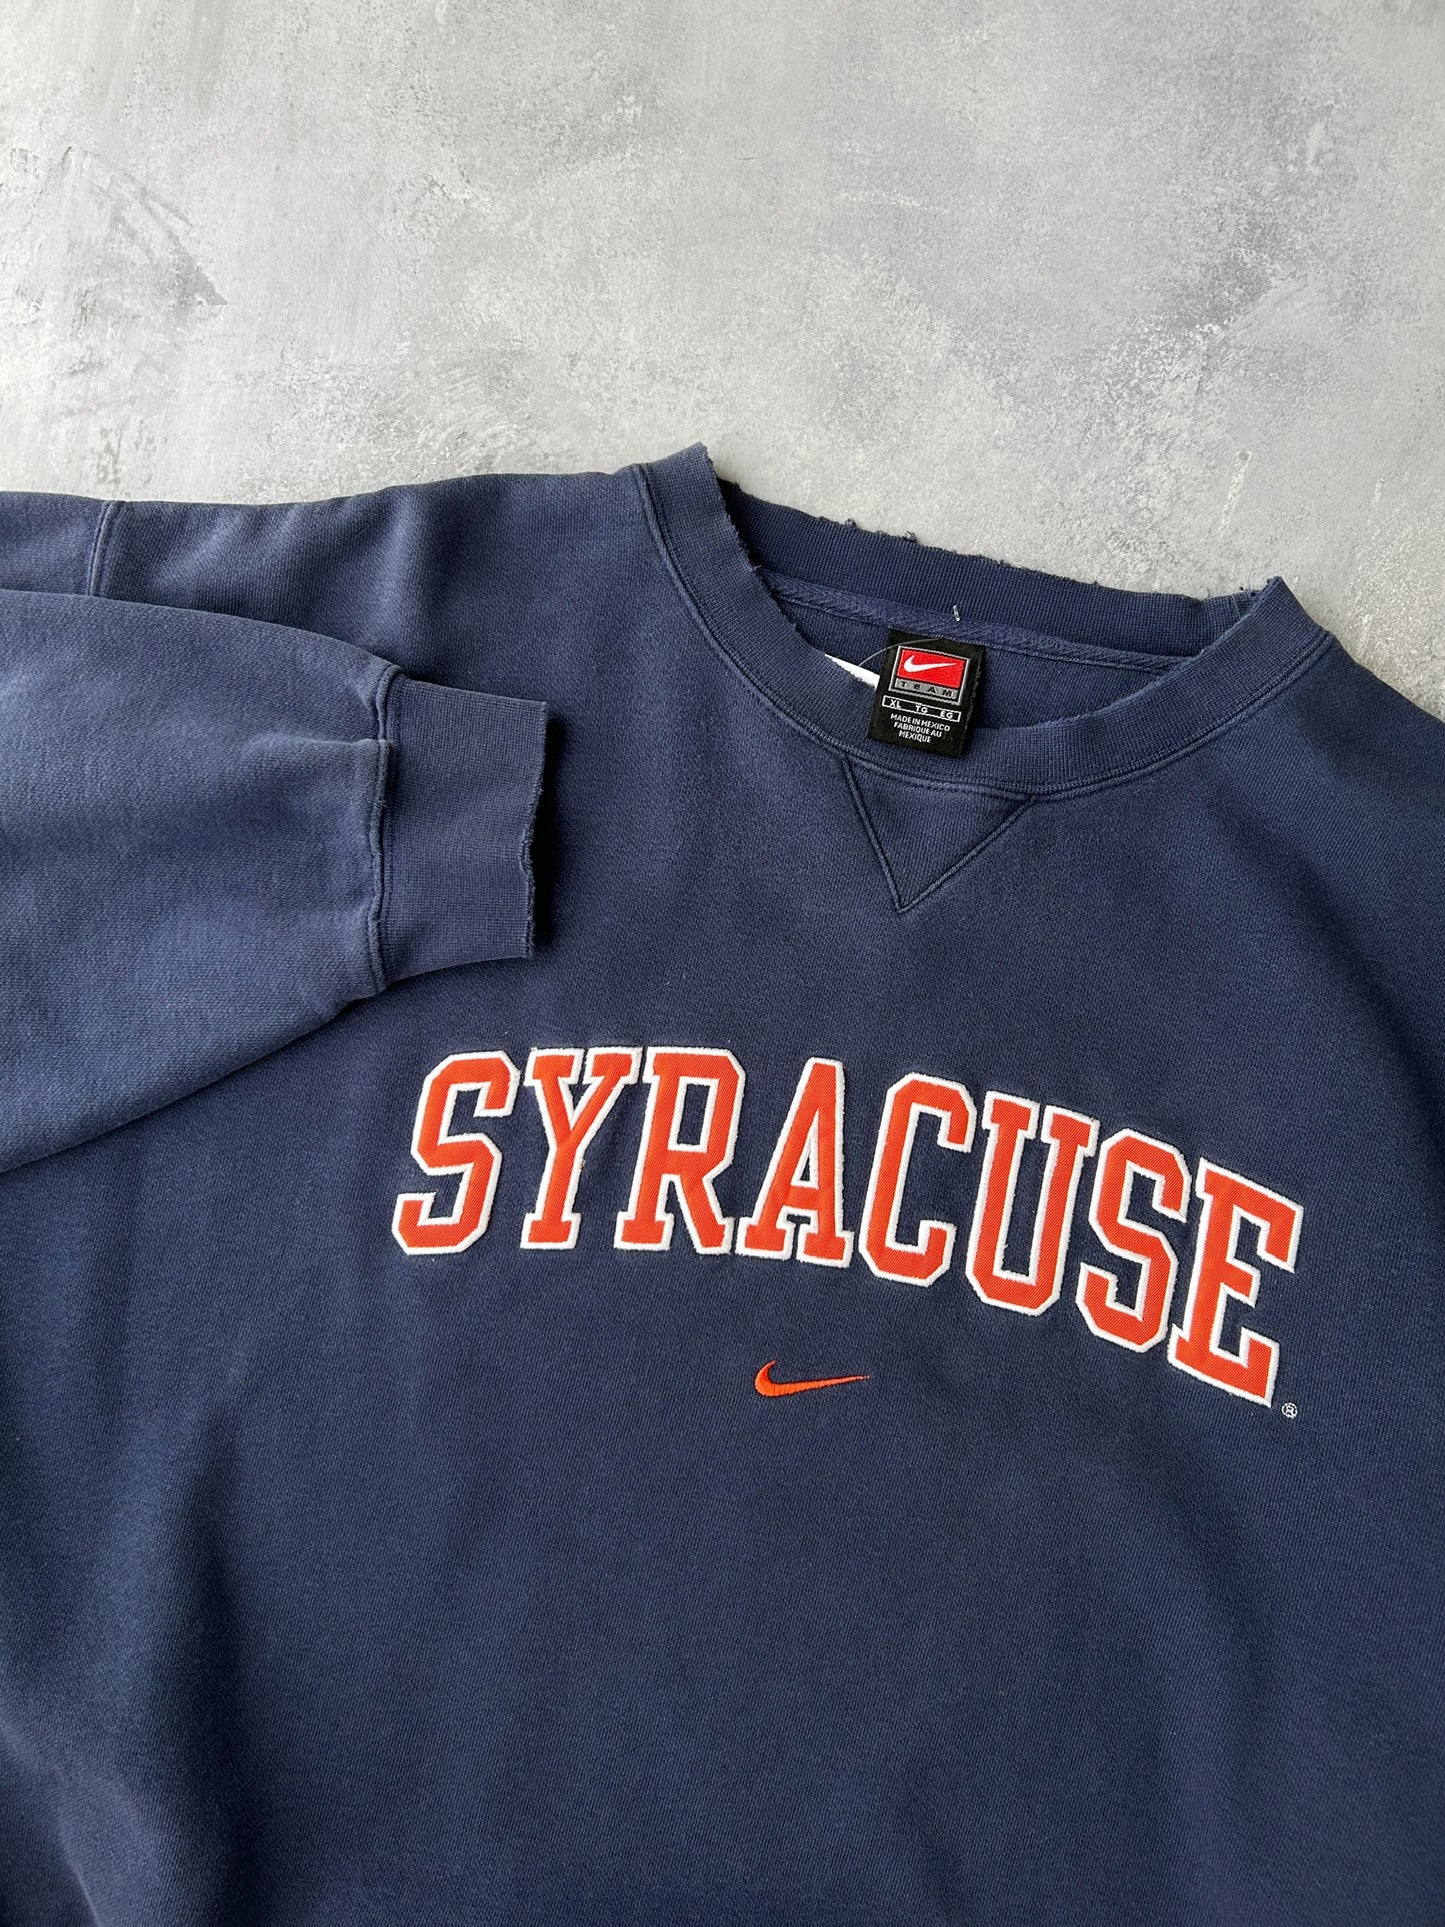 Syracuse University Nike Sweatshirt Y2K - XL